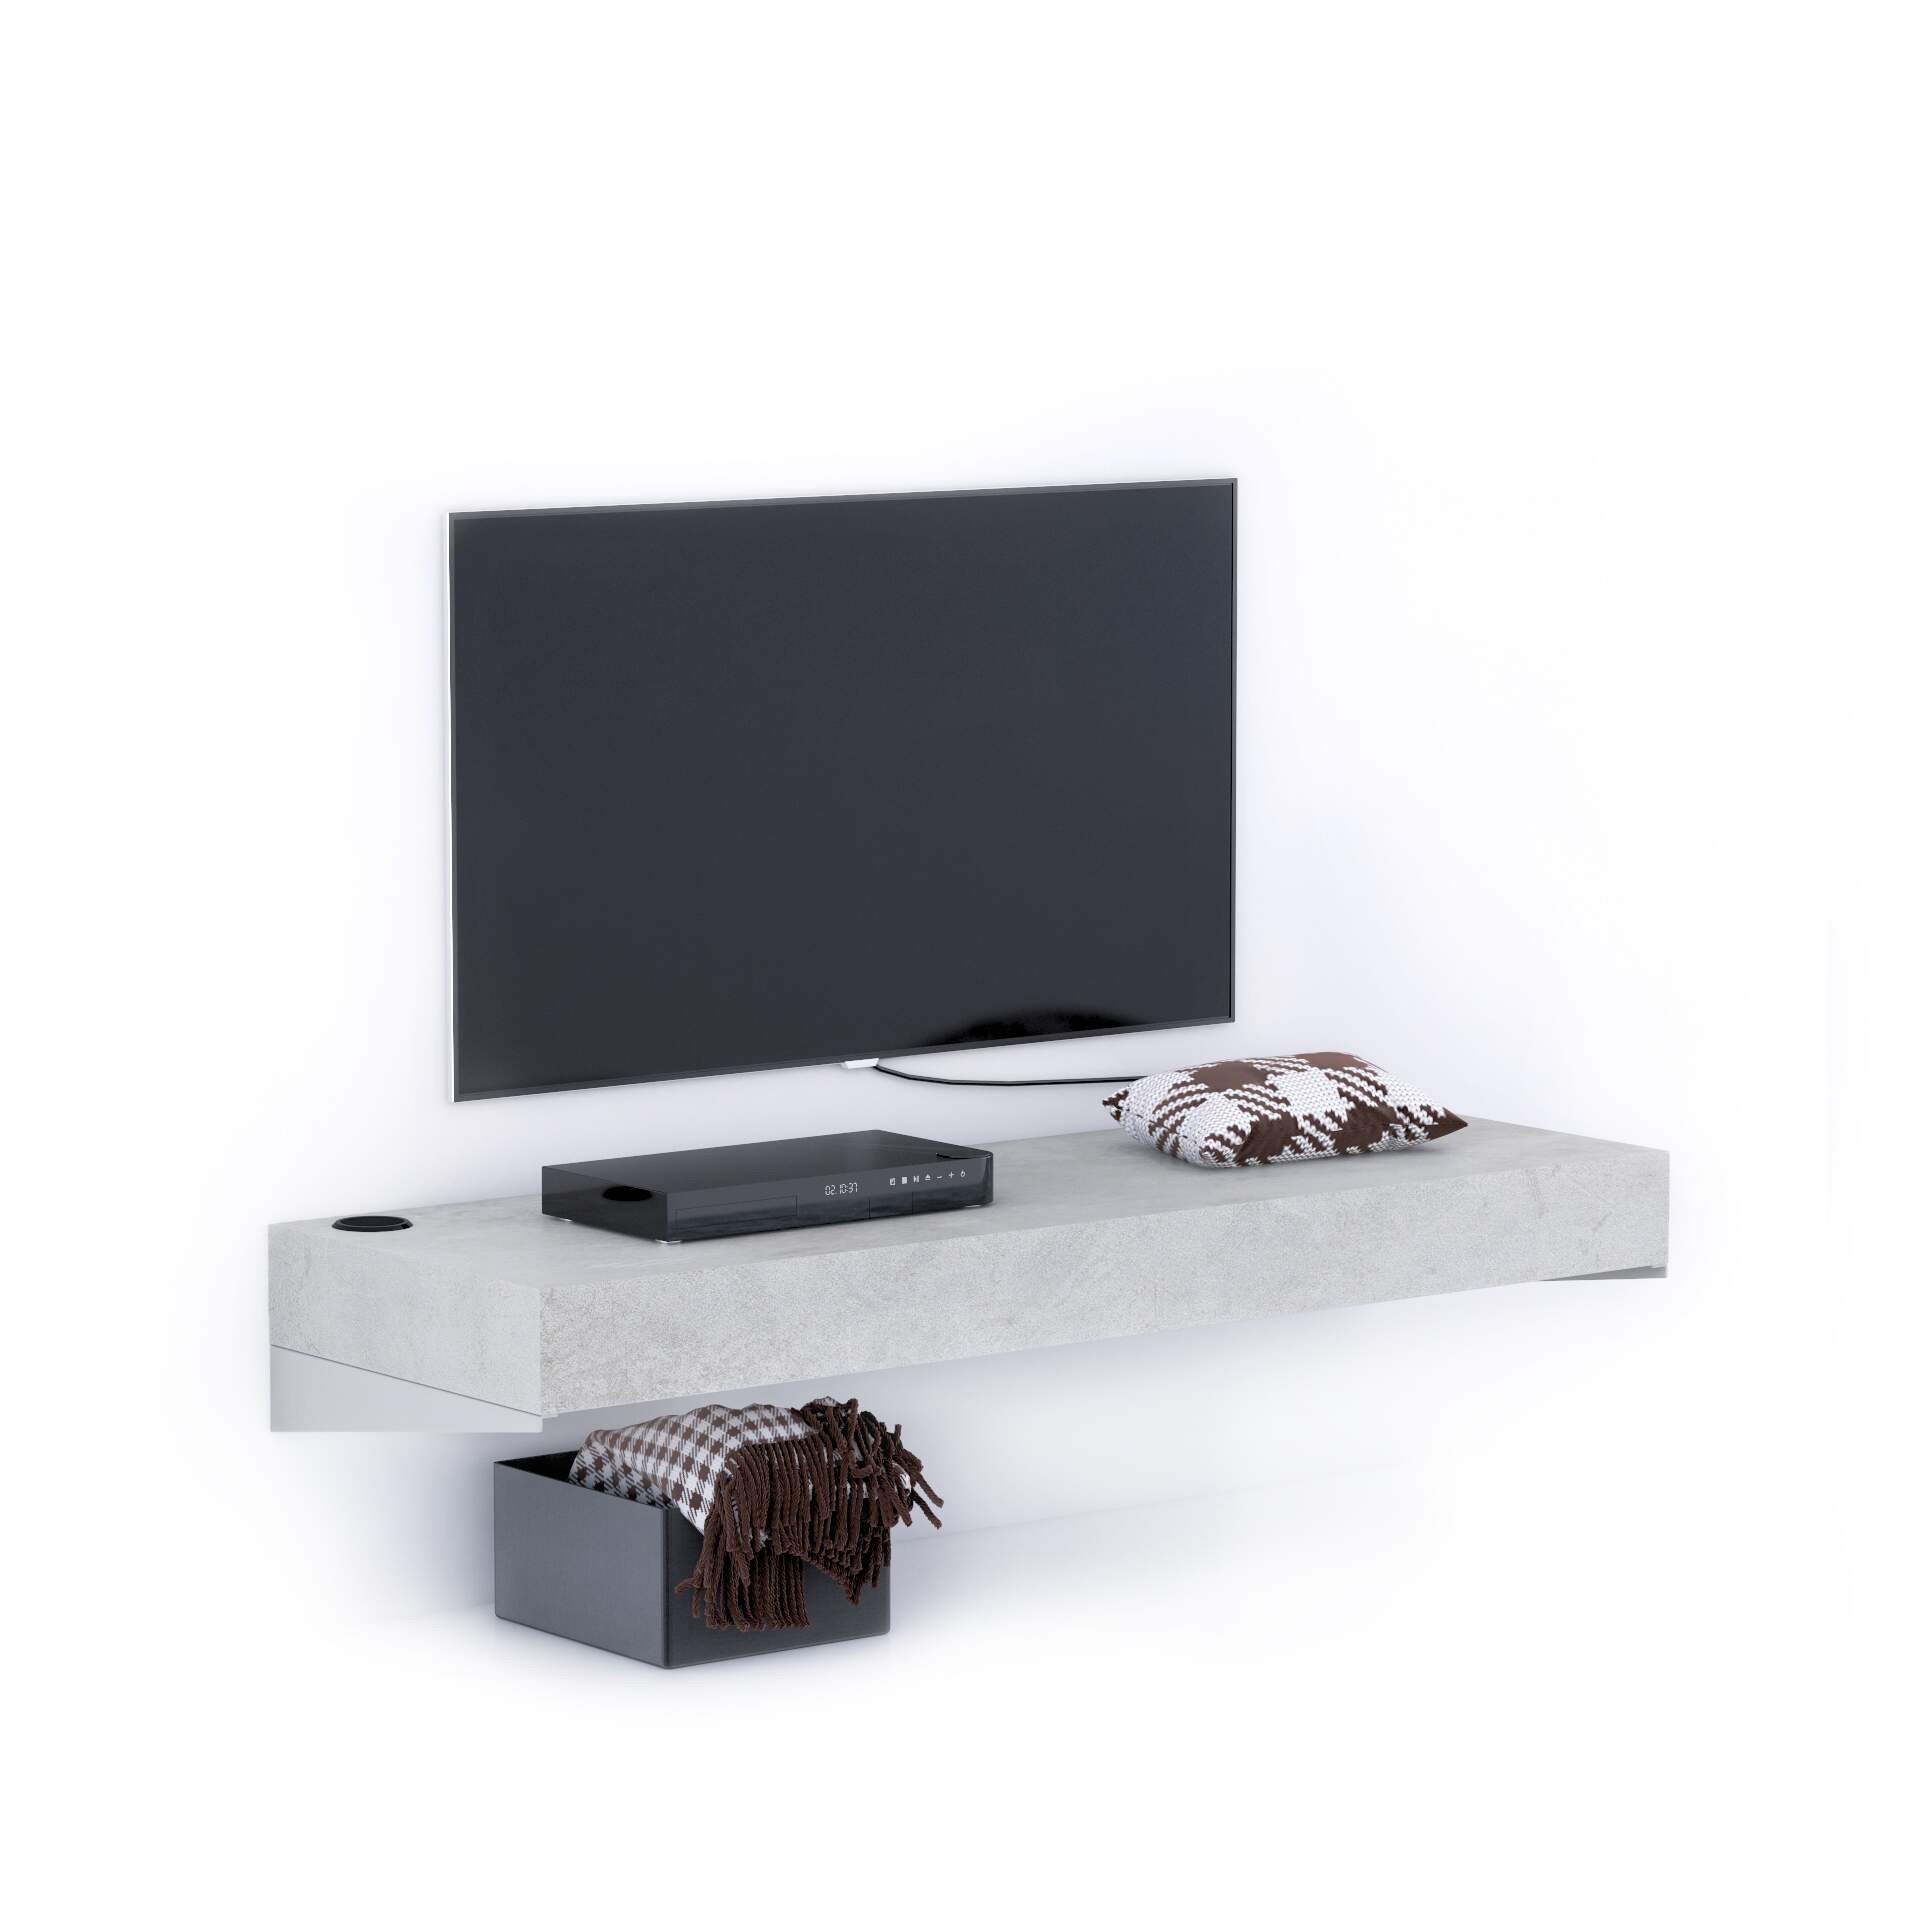 Mobili Fiver Mueble Tv Suspendido Evolution 120x40, Cemento Gris con cargador inalámbrico